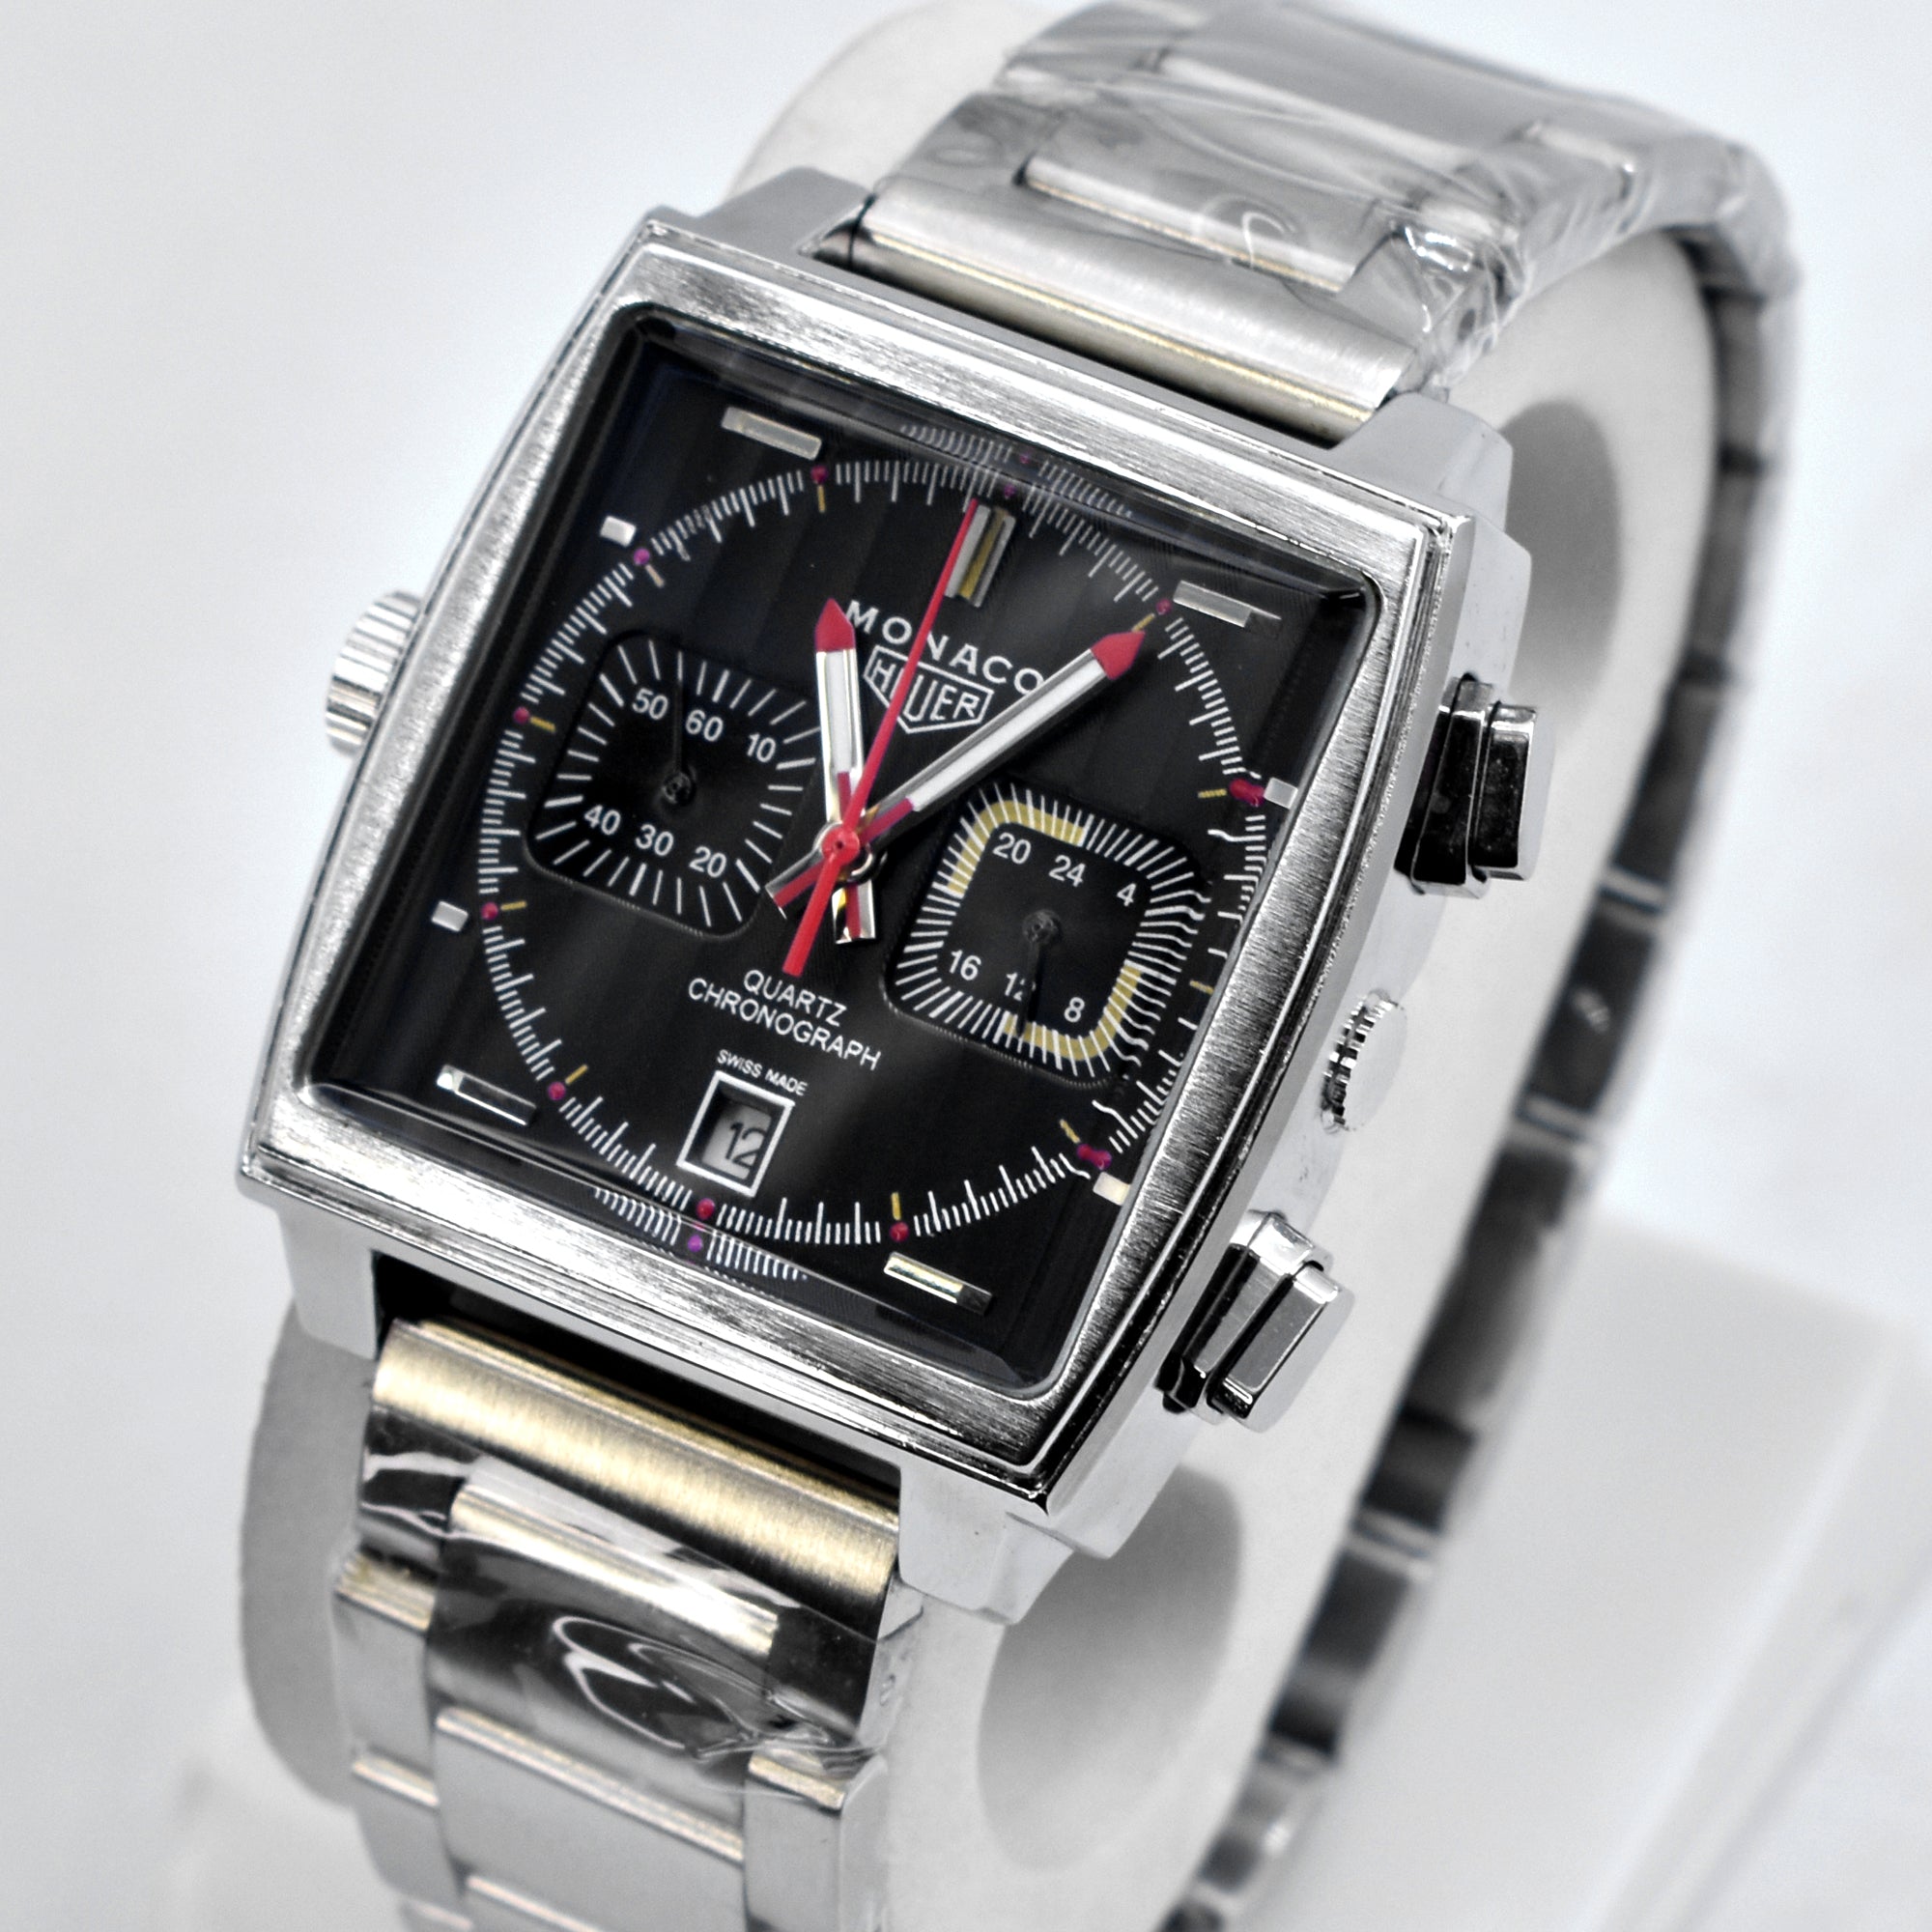 Business Class Premium Quality Quartz Watch - MNC Watch 01